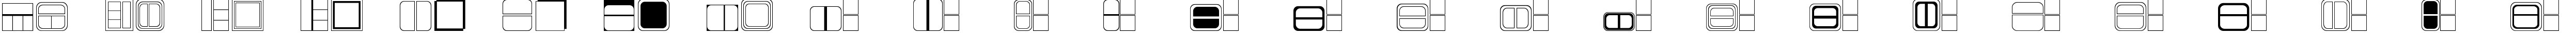 Пример написания английского алфавита шрифтом Boxes